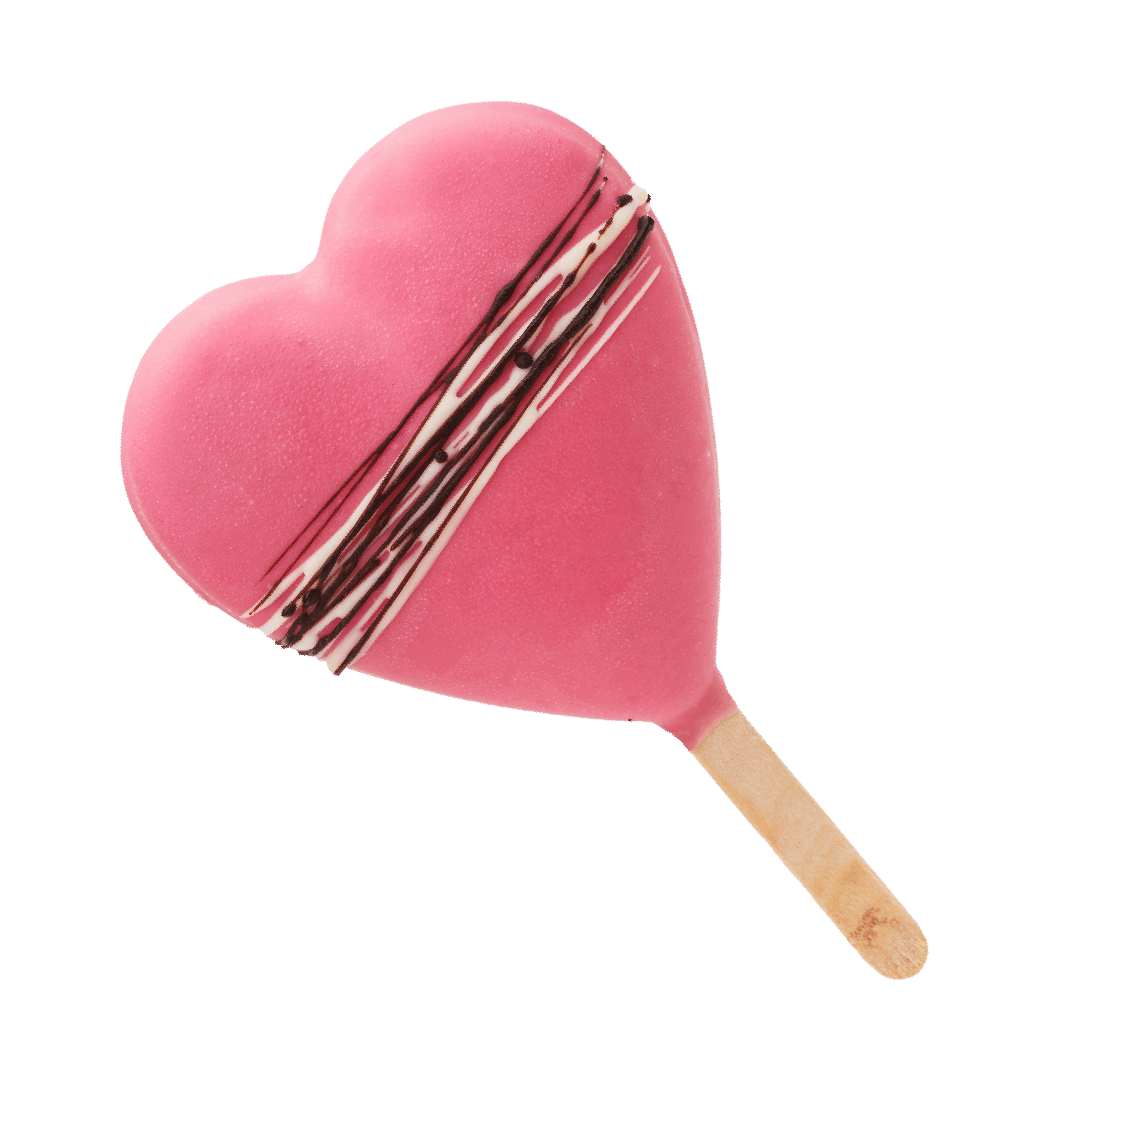 Heart popsicle